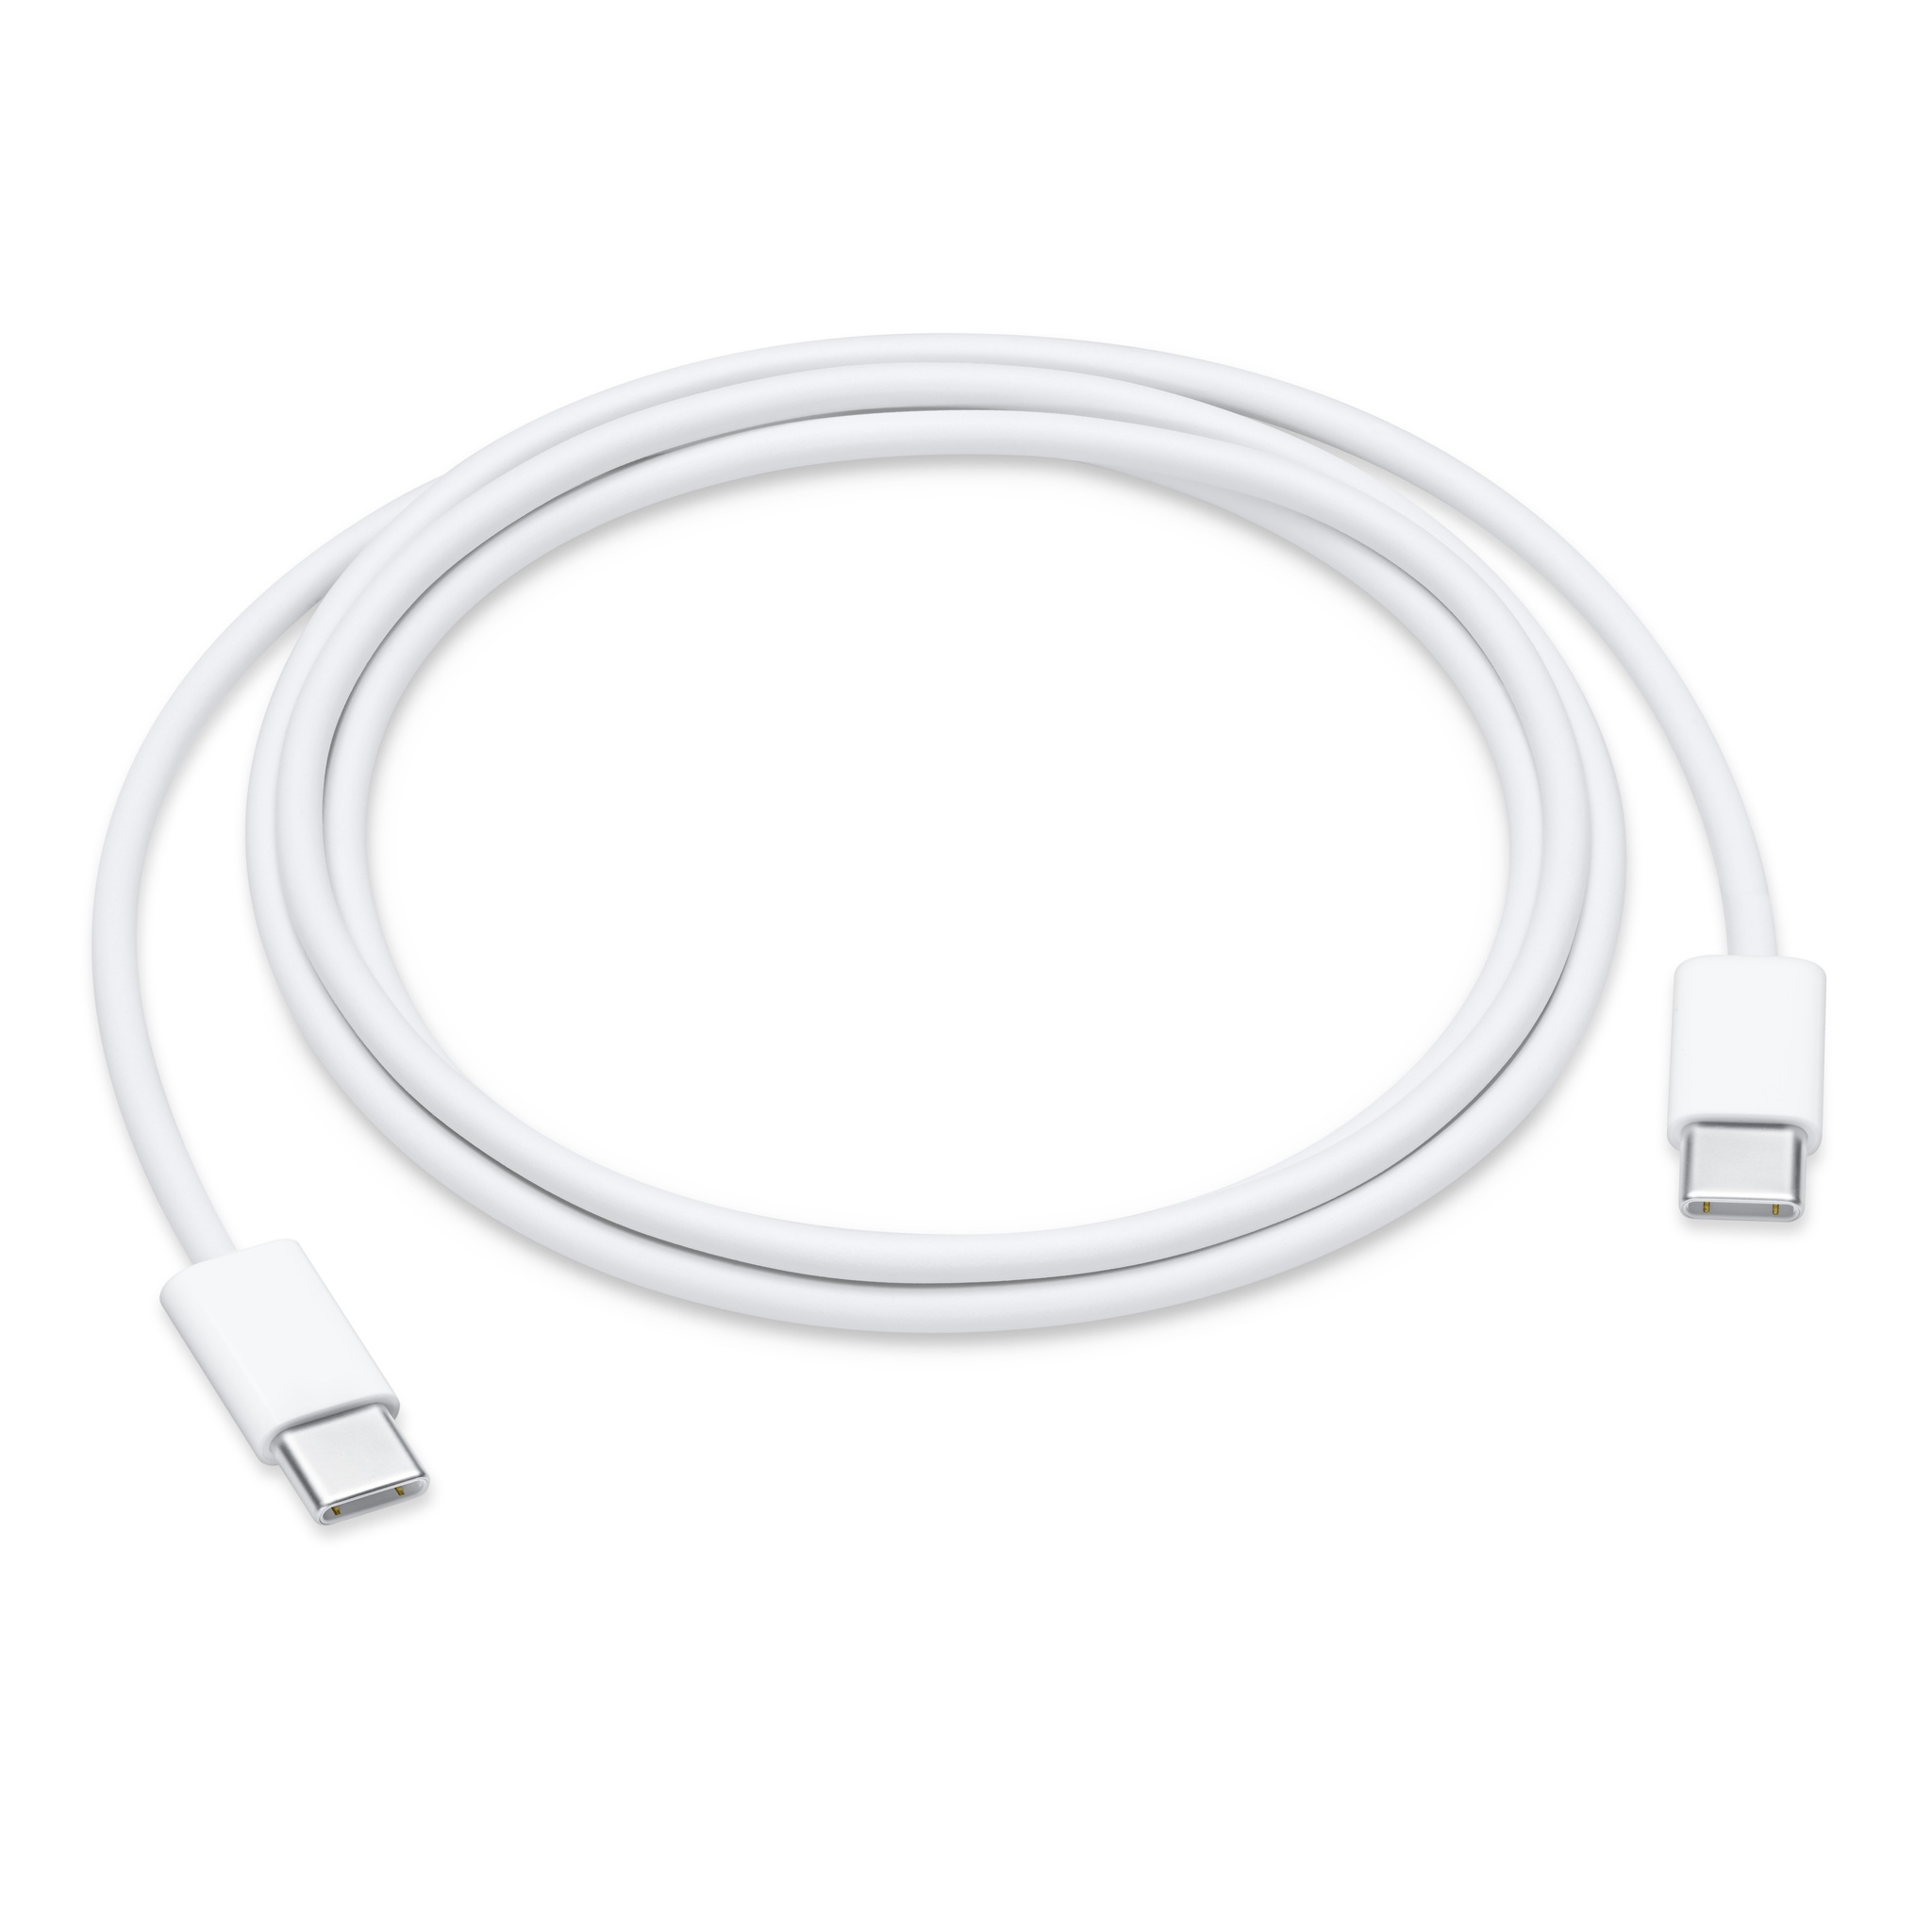 macbook usb c cable